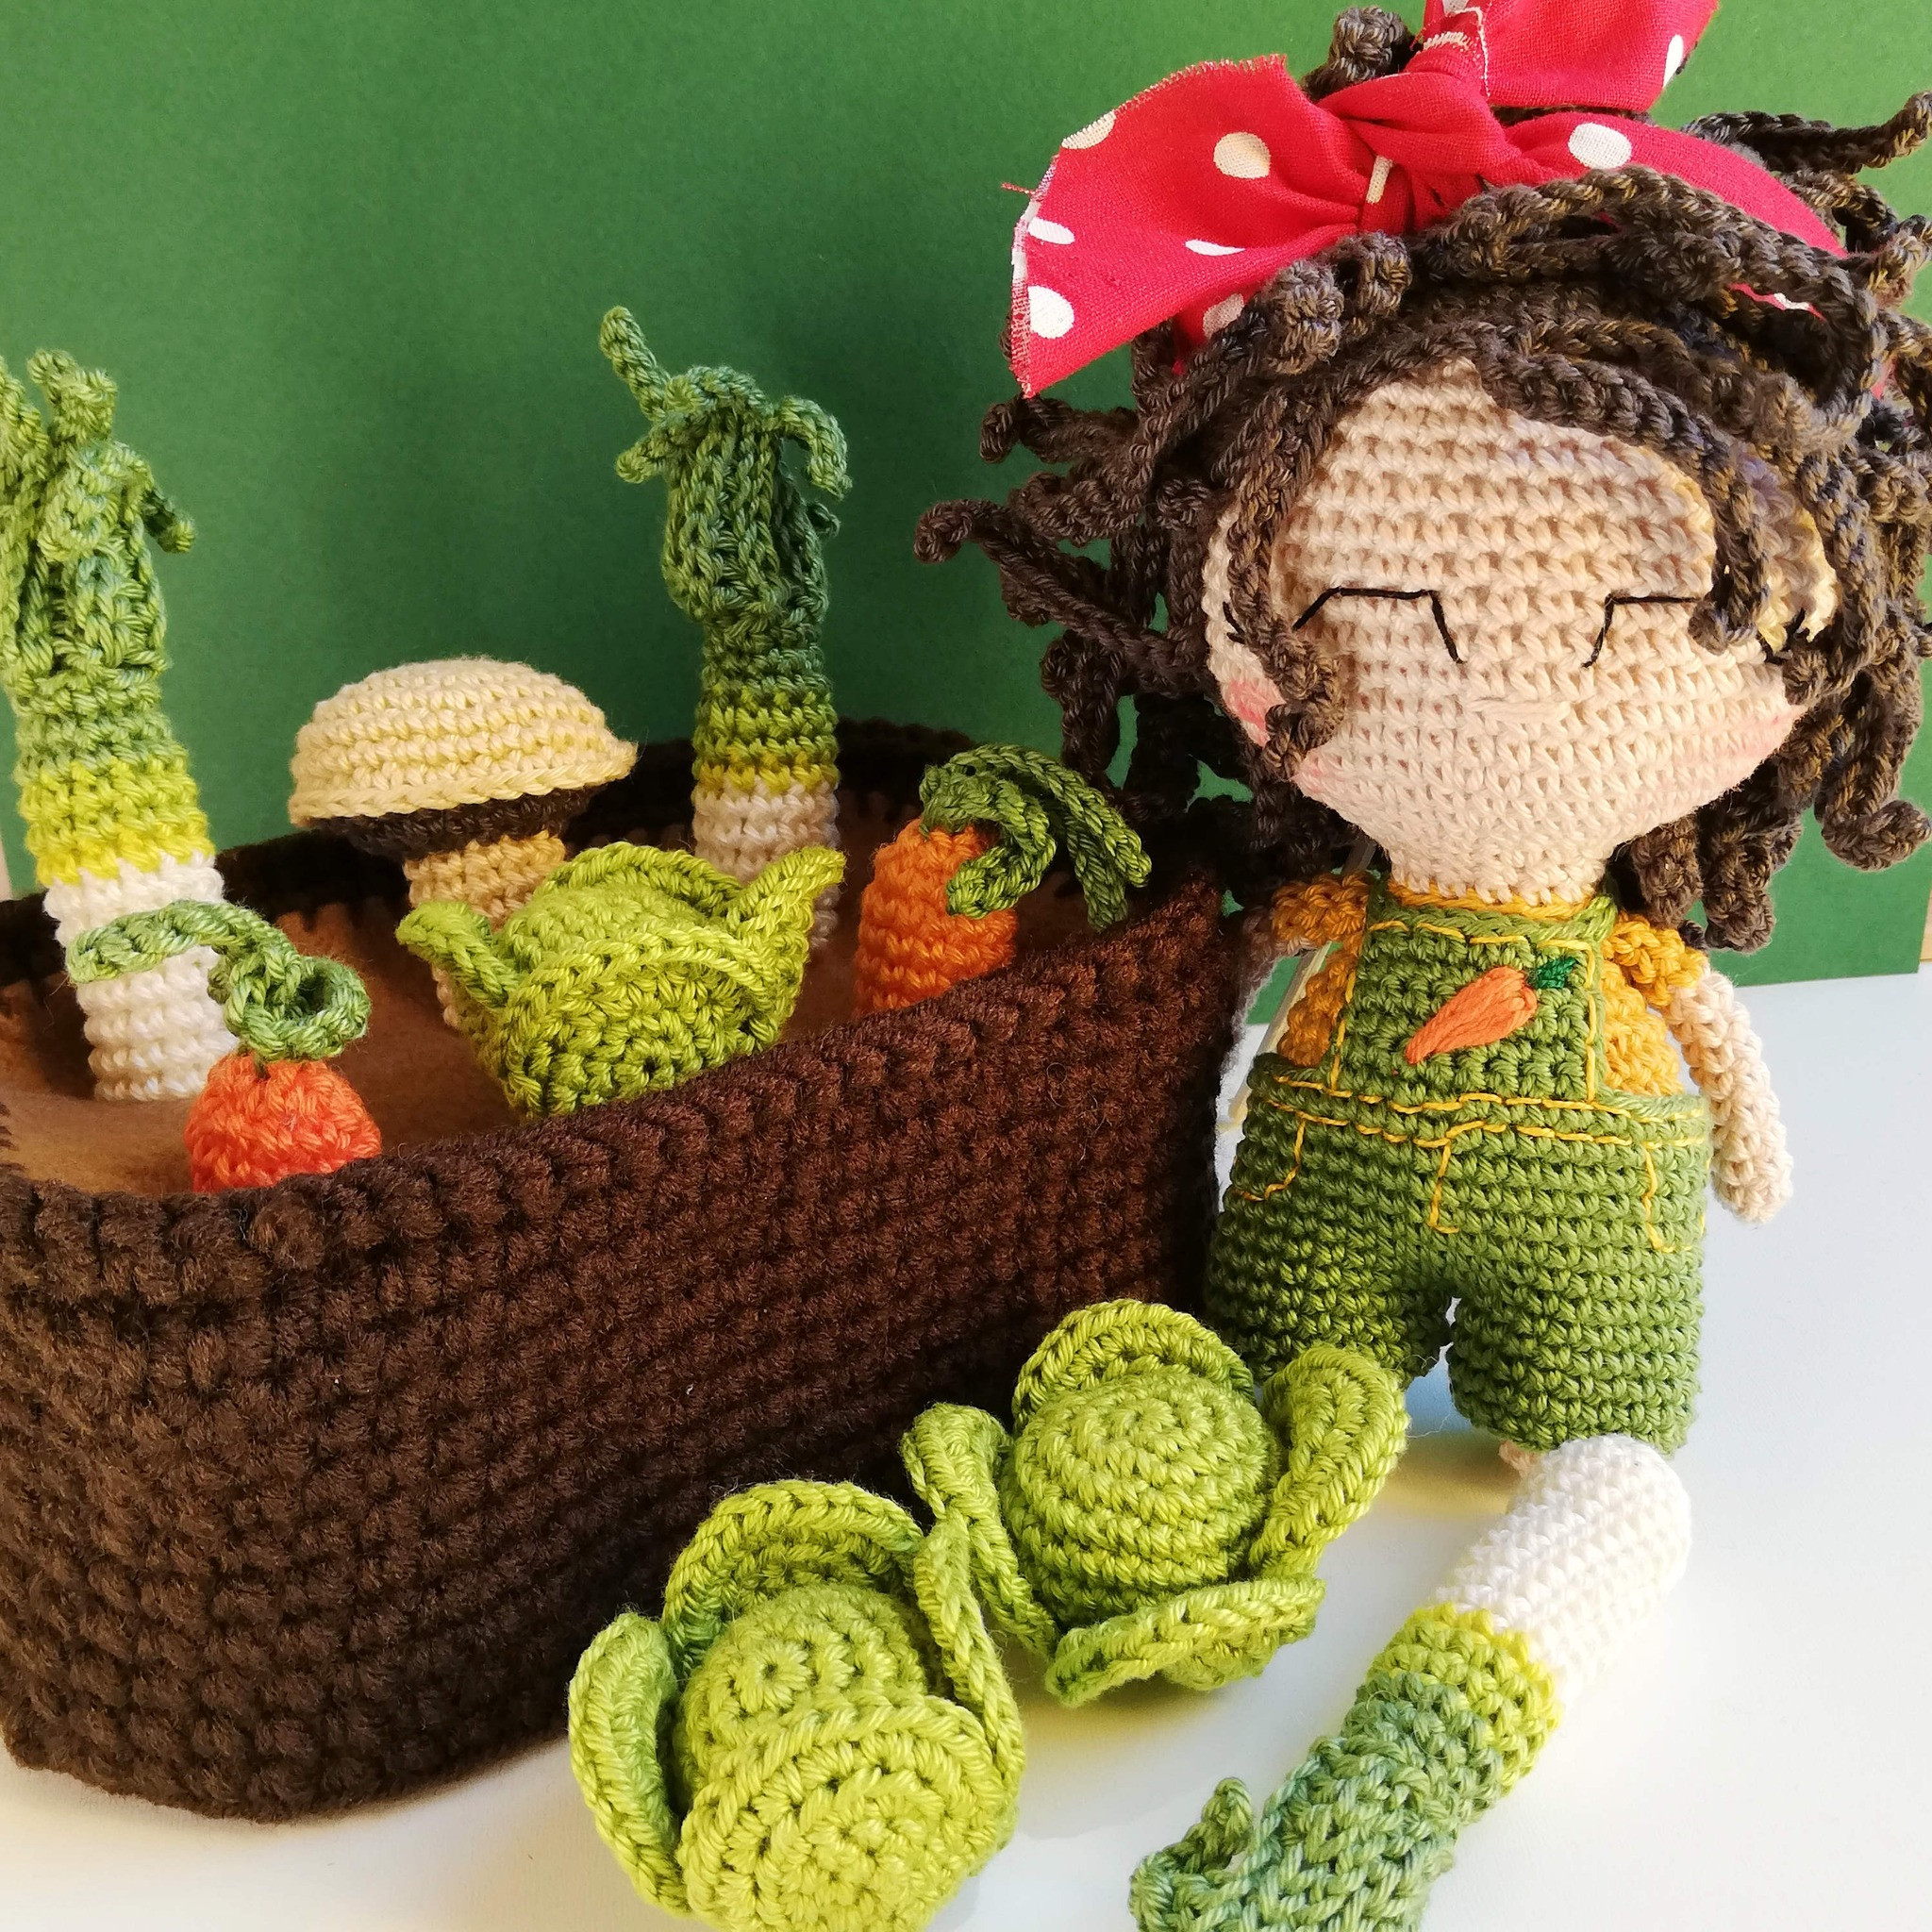 poppy crochet design free pattern cabbage